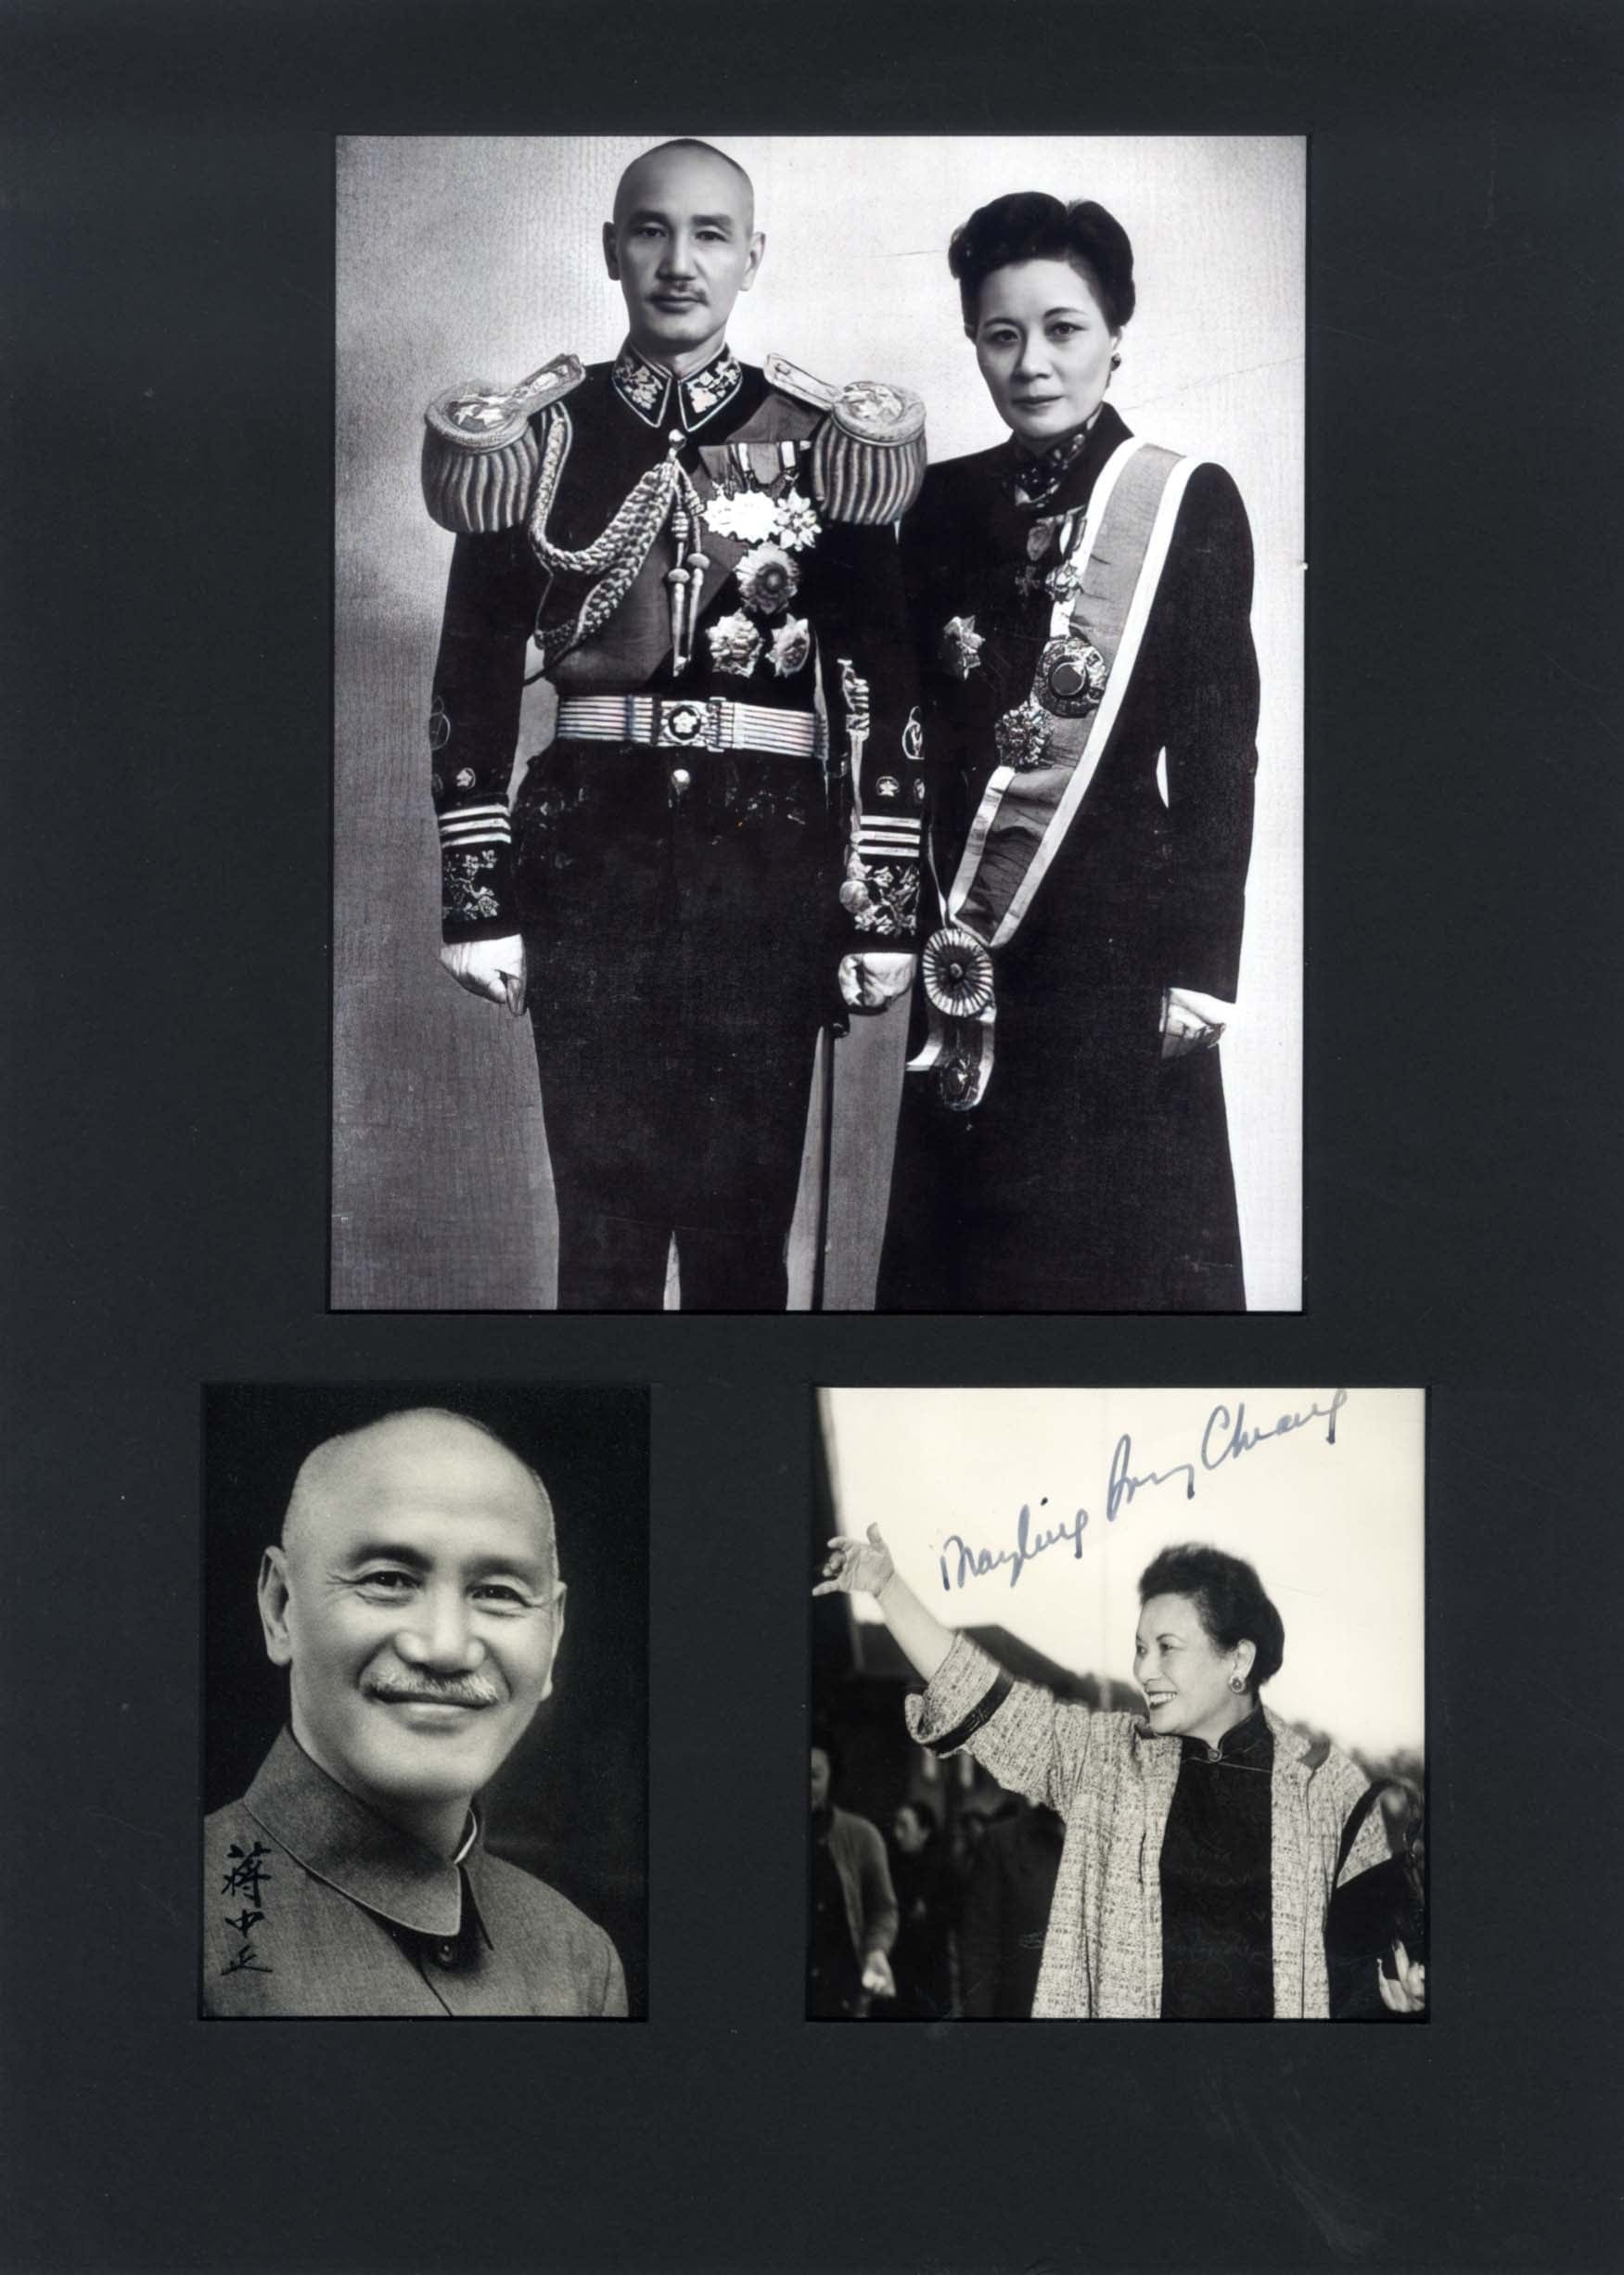 Kai-shek Chiang Autograph Autogramm | ID 8235447943317